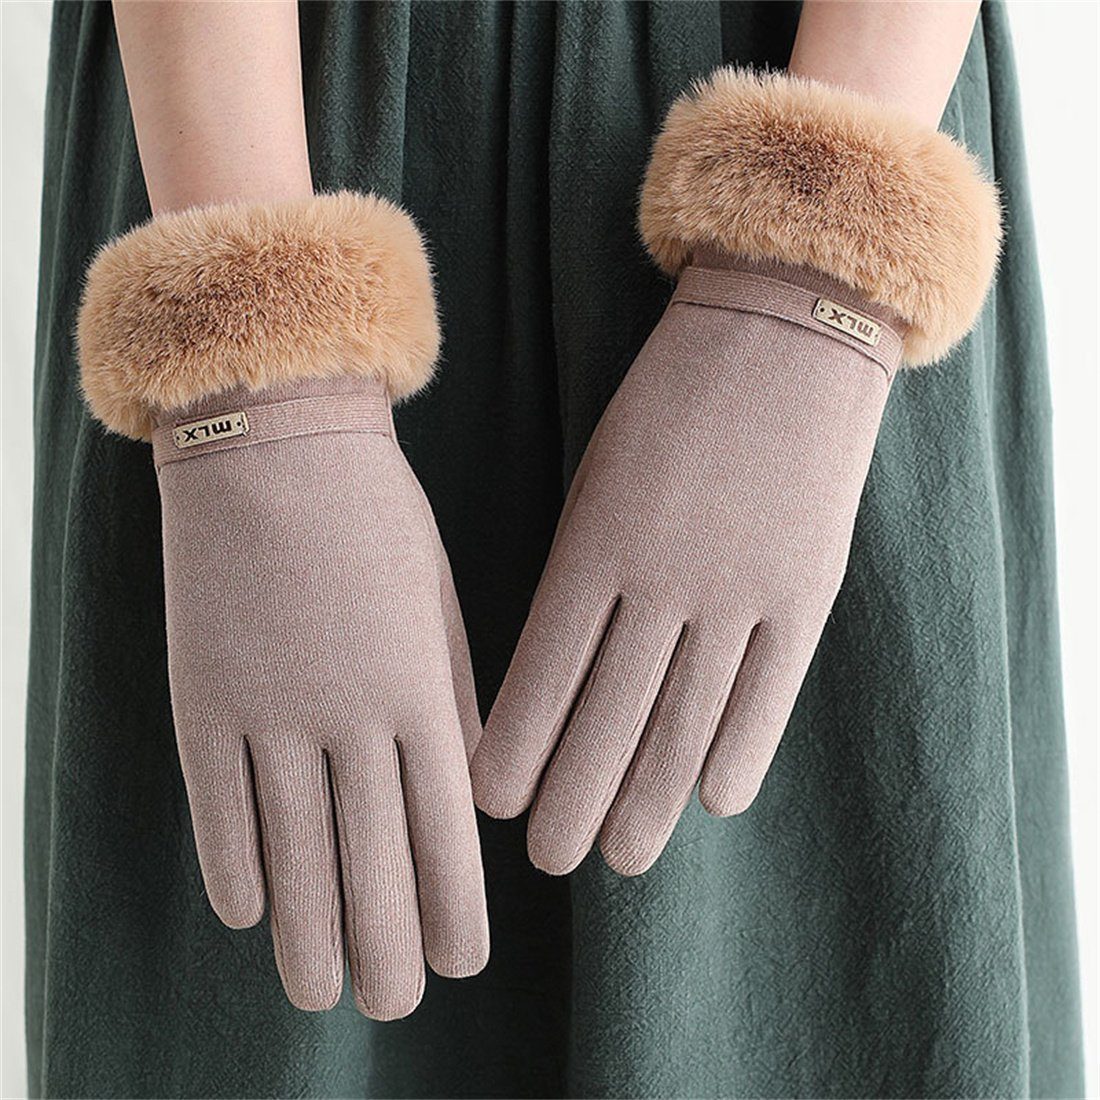 DÖRÖY Fleecehandschuhe Outdoor-Radhandschuhe für Frauen, gepolsterte warme Winterhandschuhe khaki